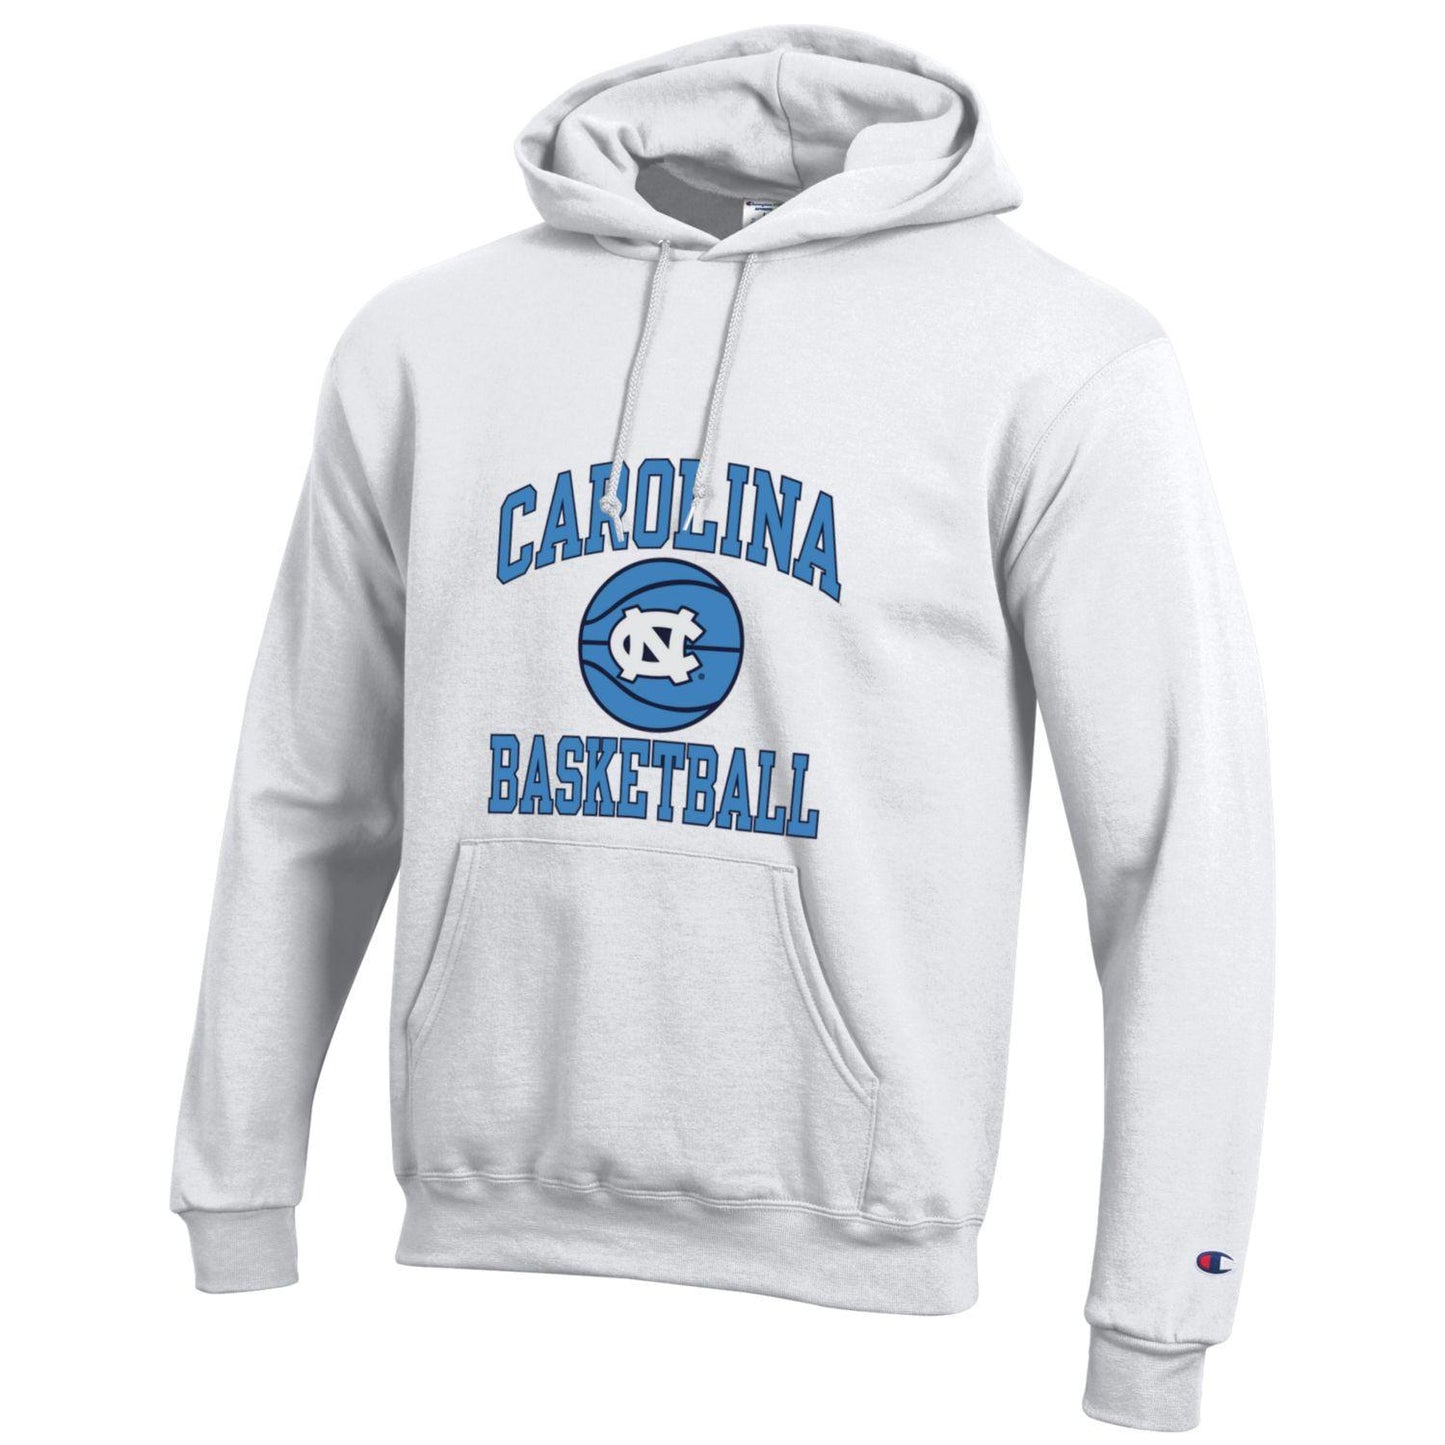 Vintage White Champion Carolina Basketball Hoodie Sweatshirt